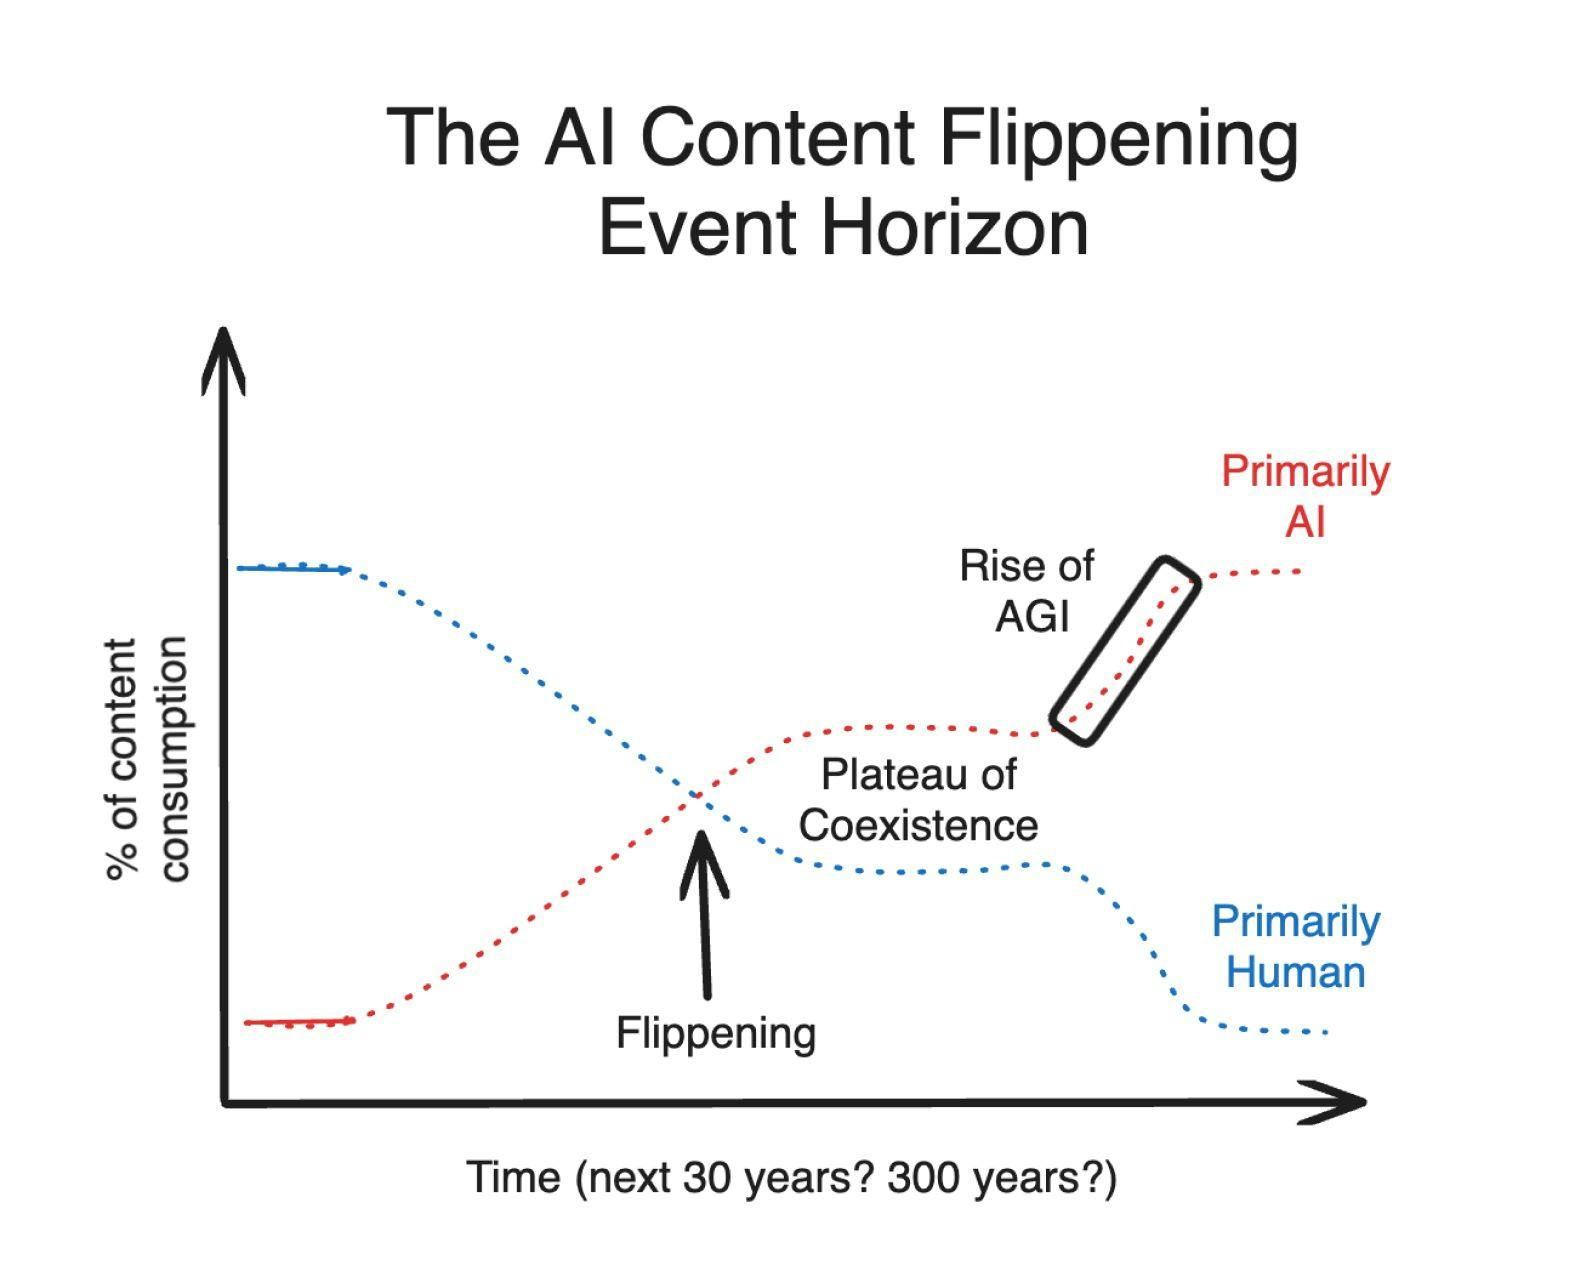 The AI Content Flippening Event Horizon